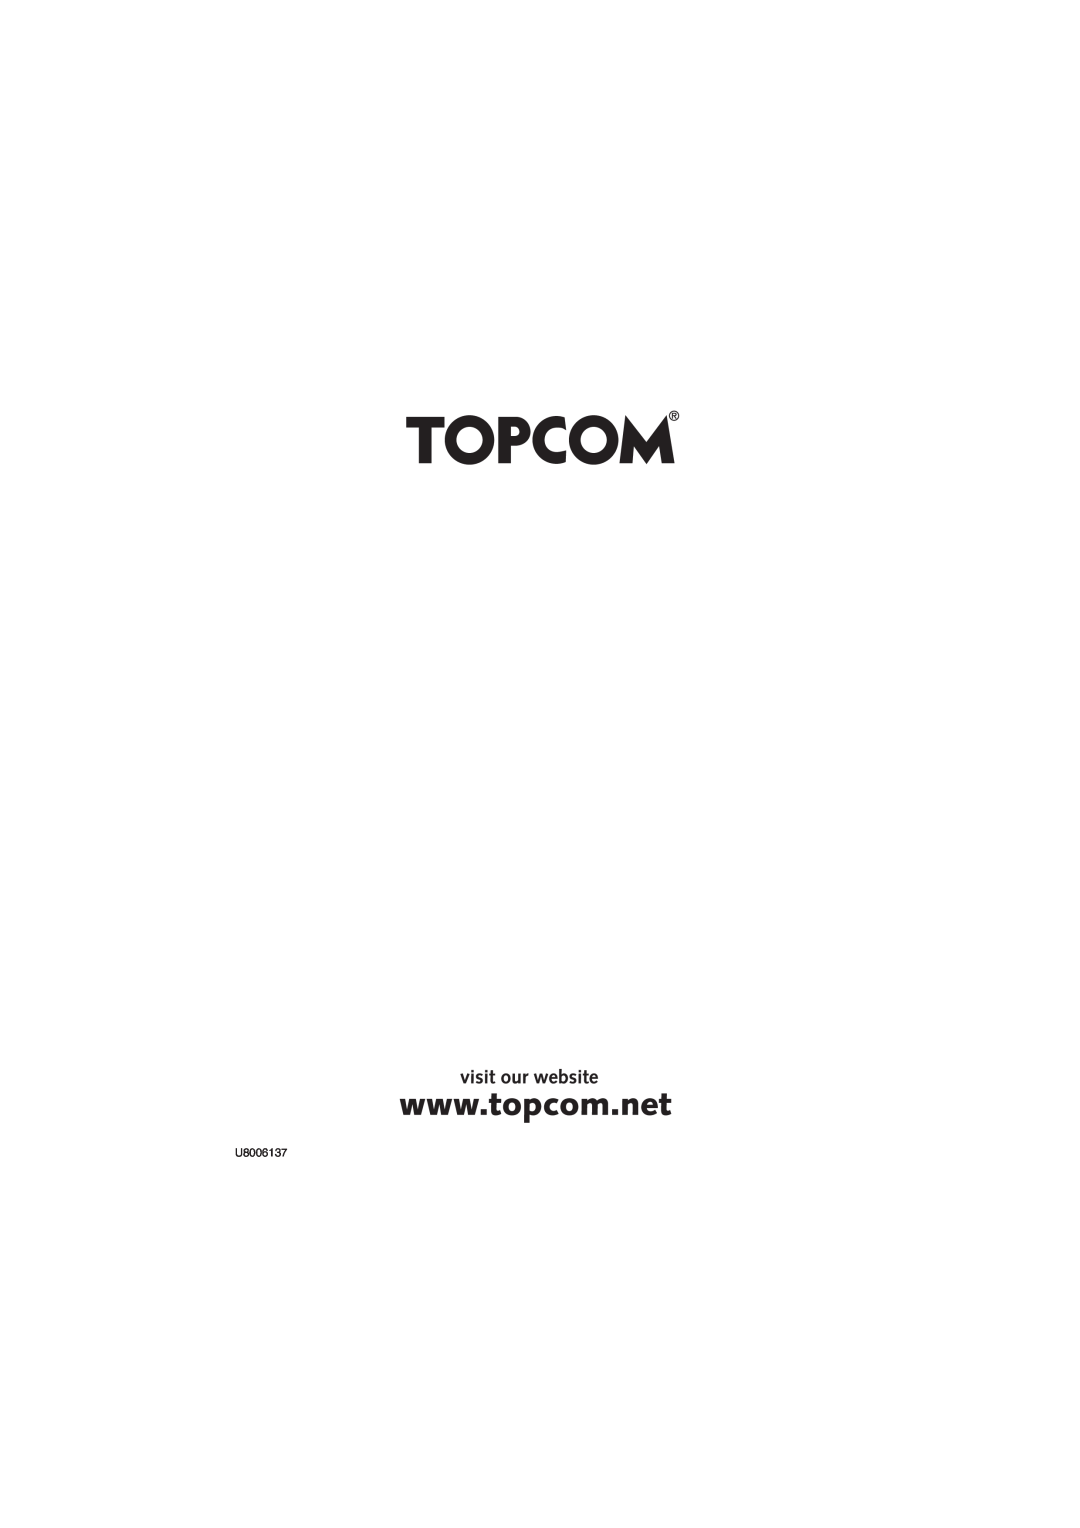 Topcom BUTLER 3500 manual U8006137 